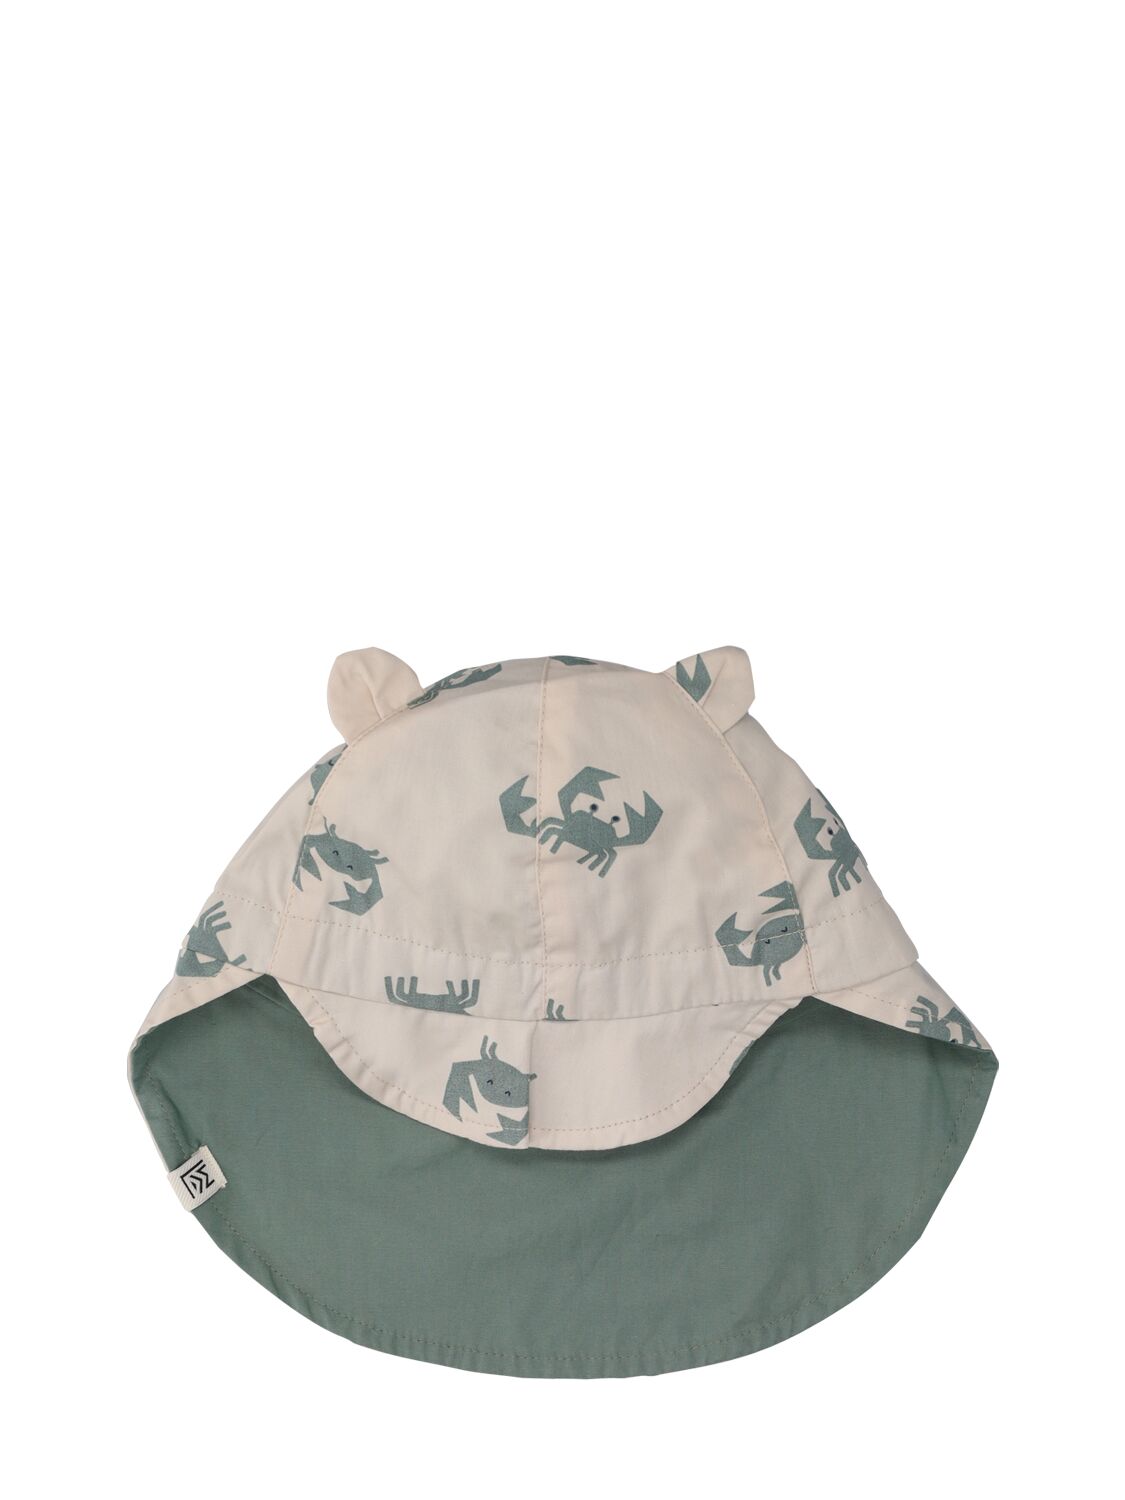 Image of Crab Print Reversible Organic Cotton Hat